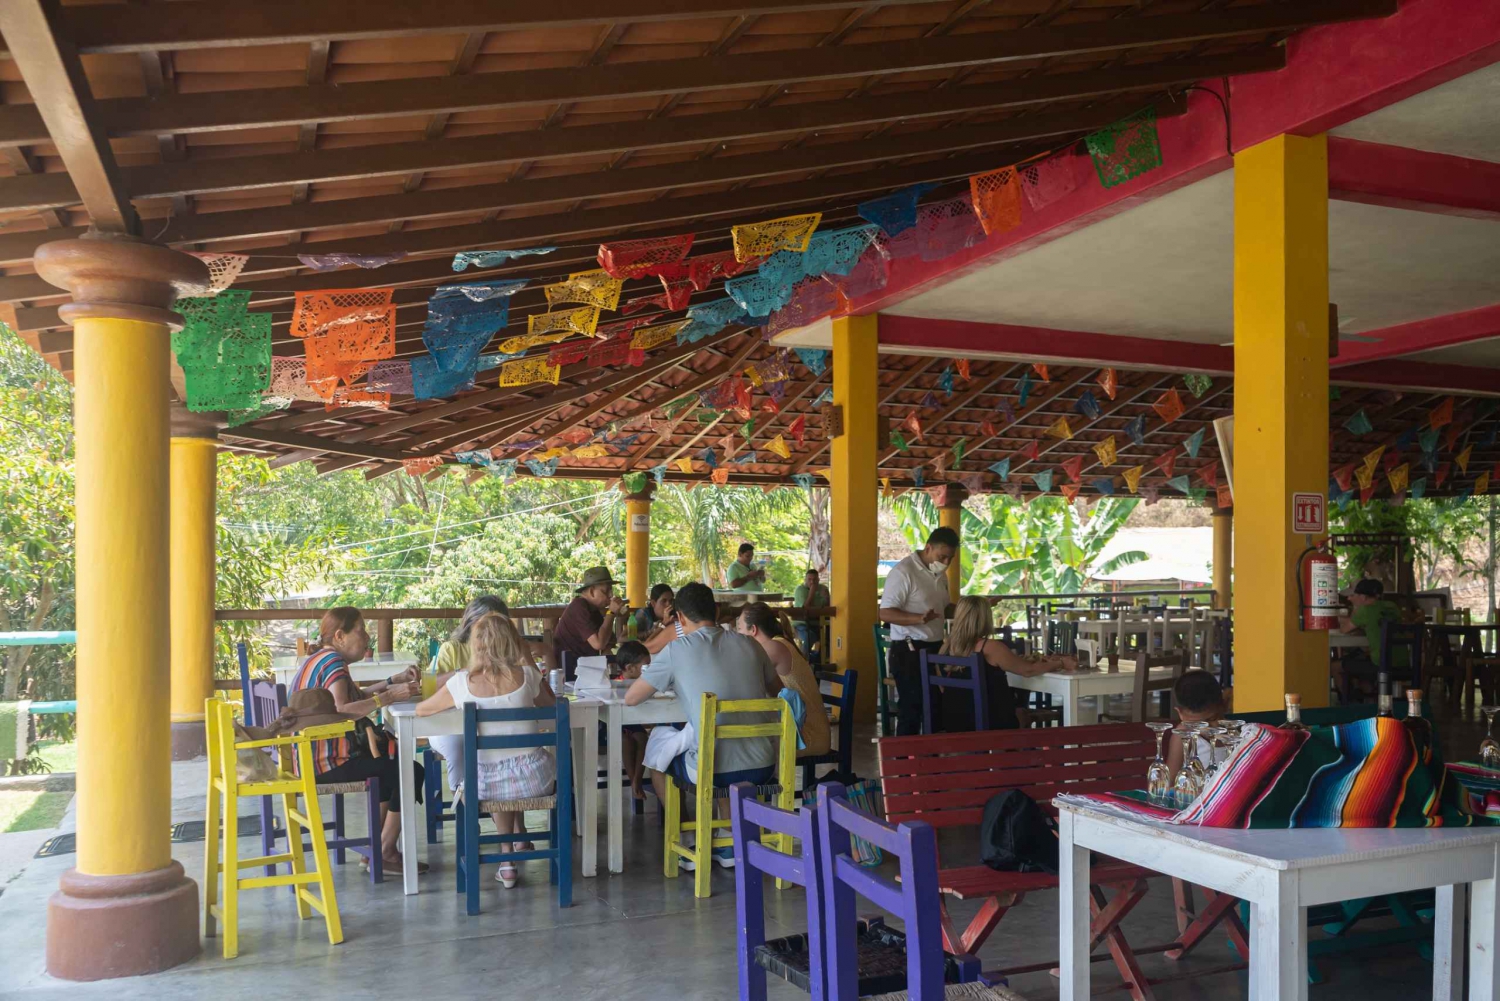 Puerto Vallarta: Sayulita and San Pancho Beaches Tour